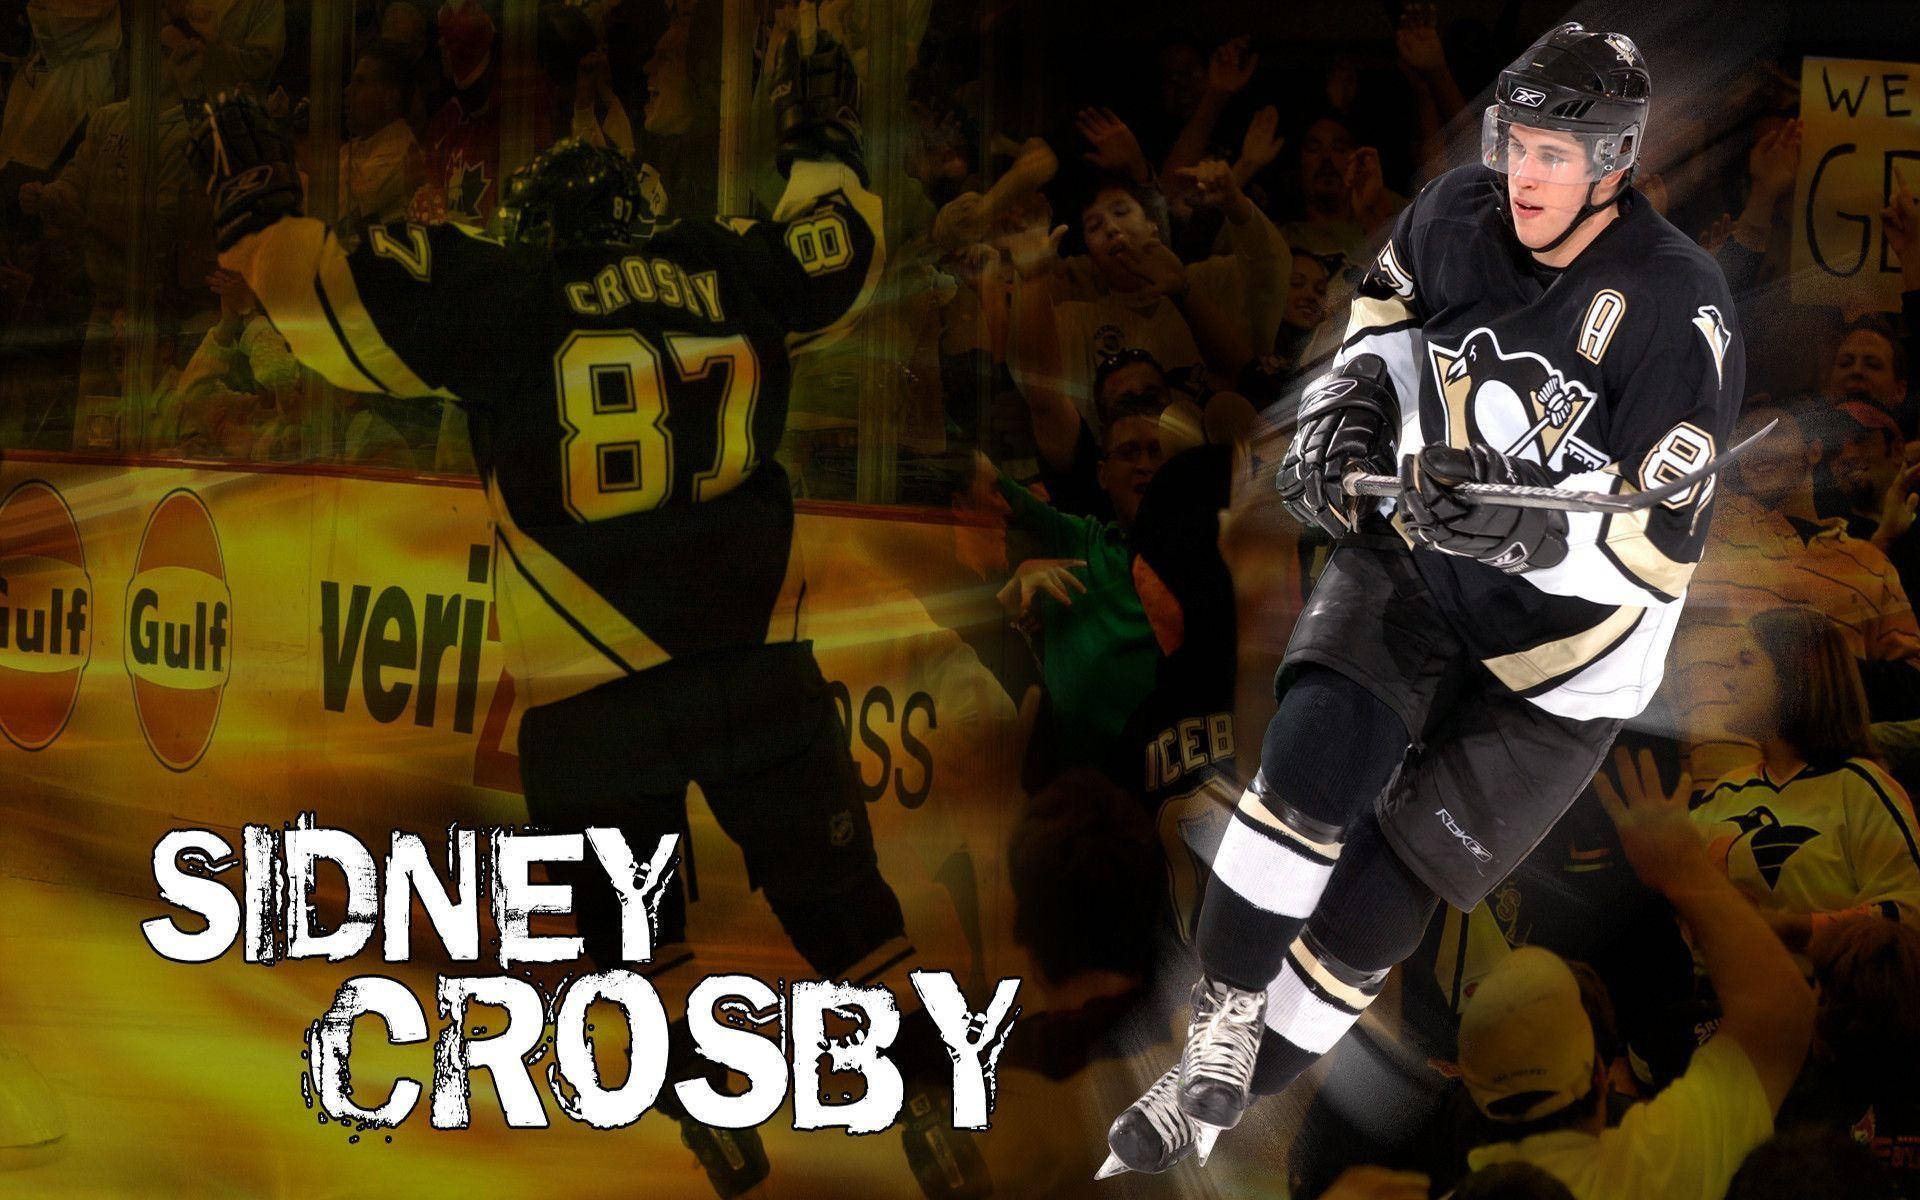 Sidneycrosby Eishockey Poster Wallpaper